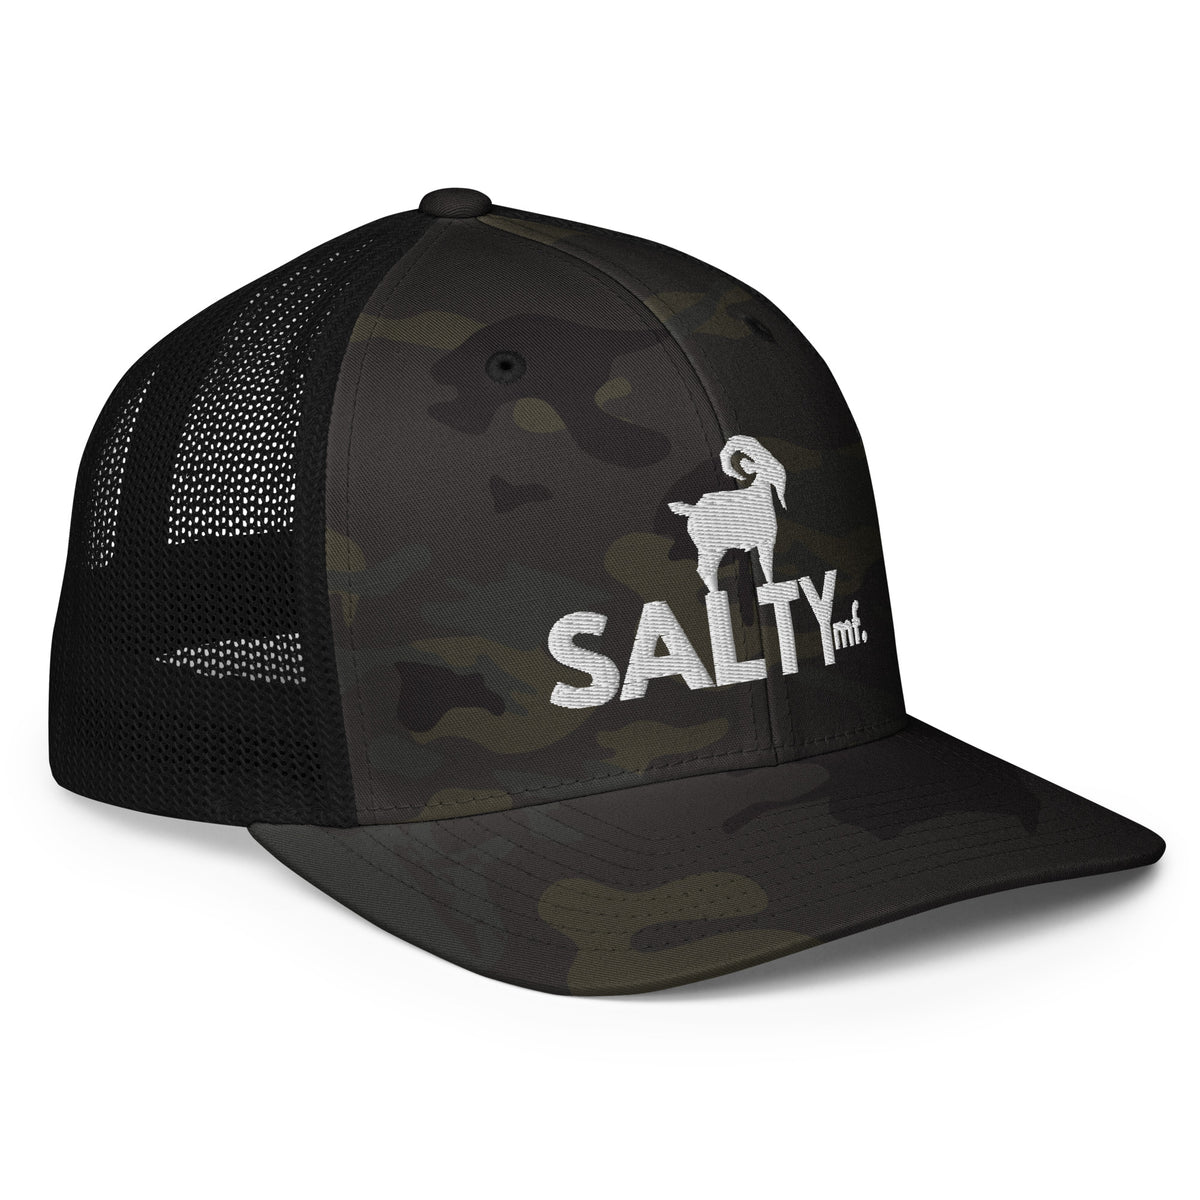 Saltymf Multicam Trucker Black/Black – SALTYmf